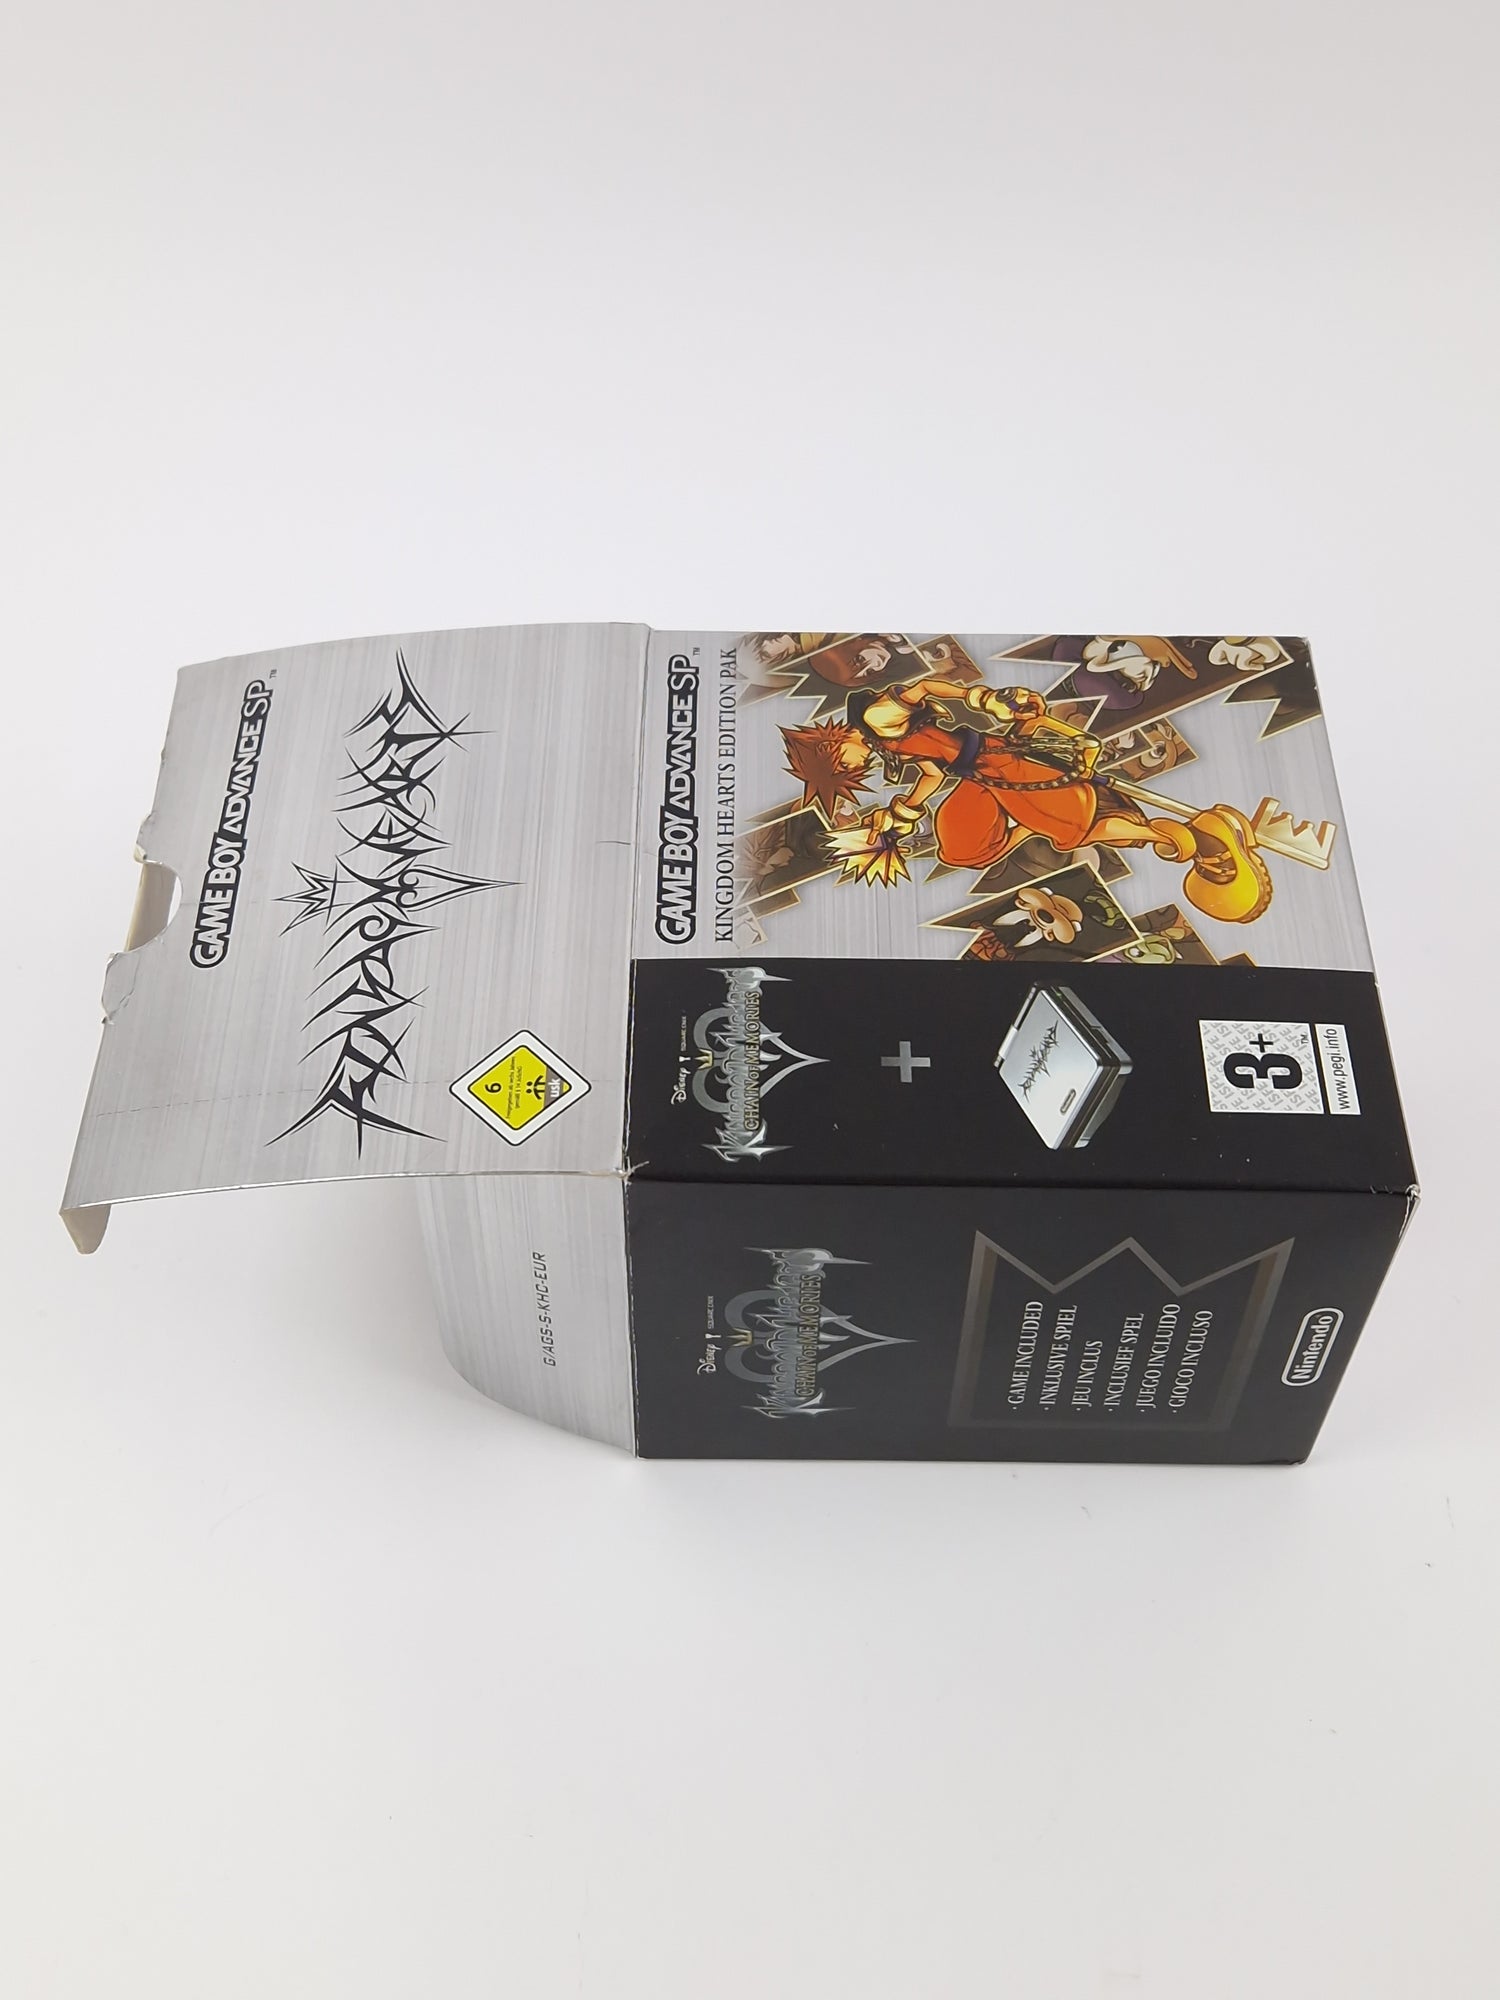 Nintendo Game Boy Advance SP Console: Kingsdom Hearts Edition Pak - OVP GBA PAL